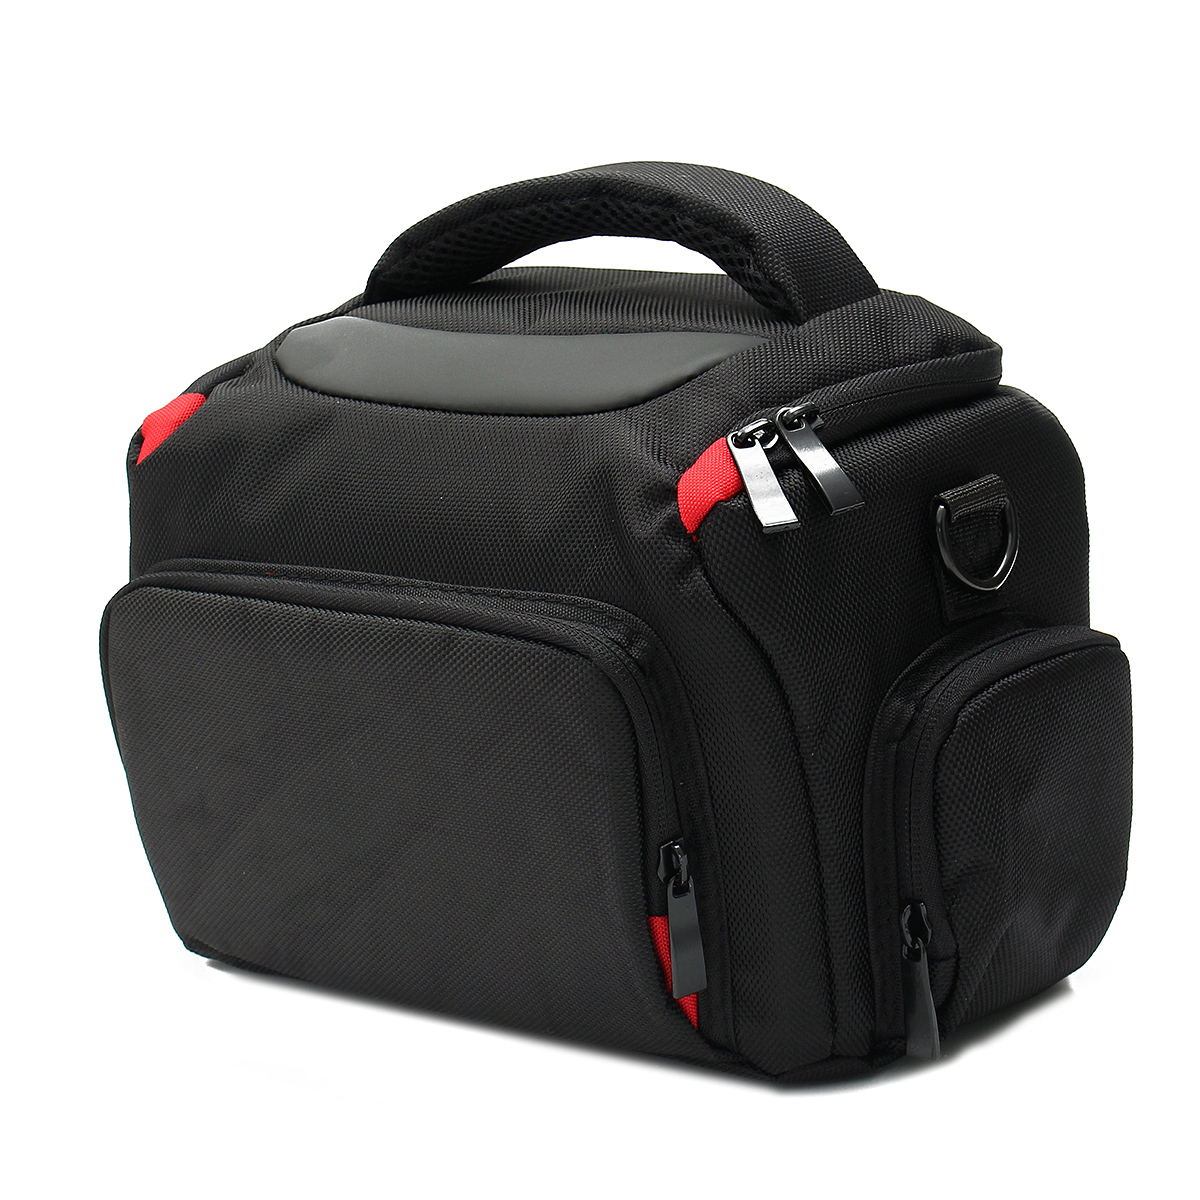 Camera-Storage-Travel-Carry-Bag-with-Rain-Cover-Strap-for-DSLR-SLR-Camera-Camera-Lens-Flash-1632987-4